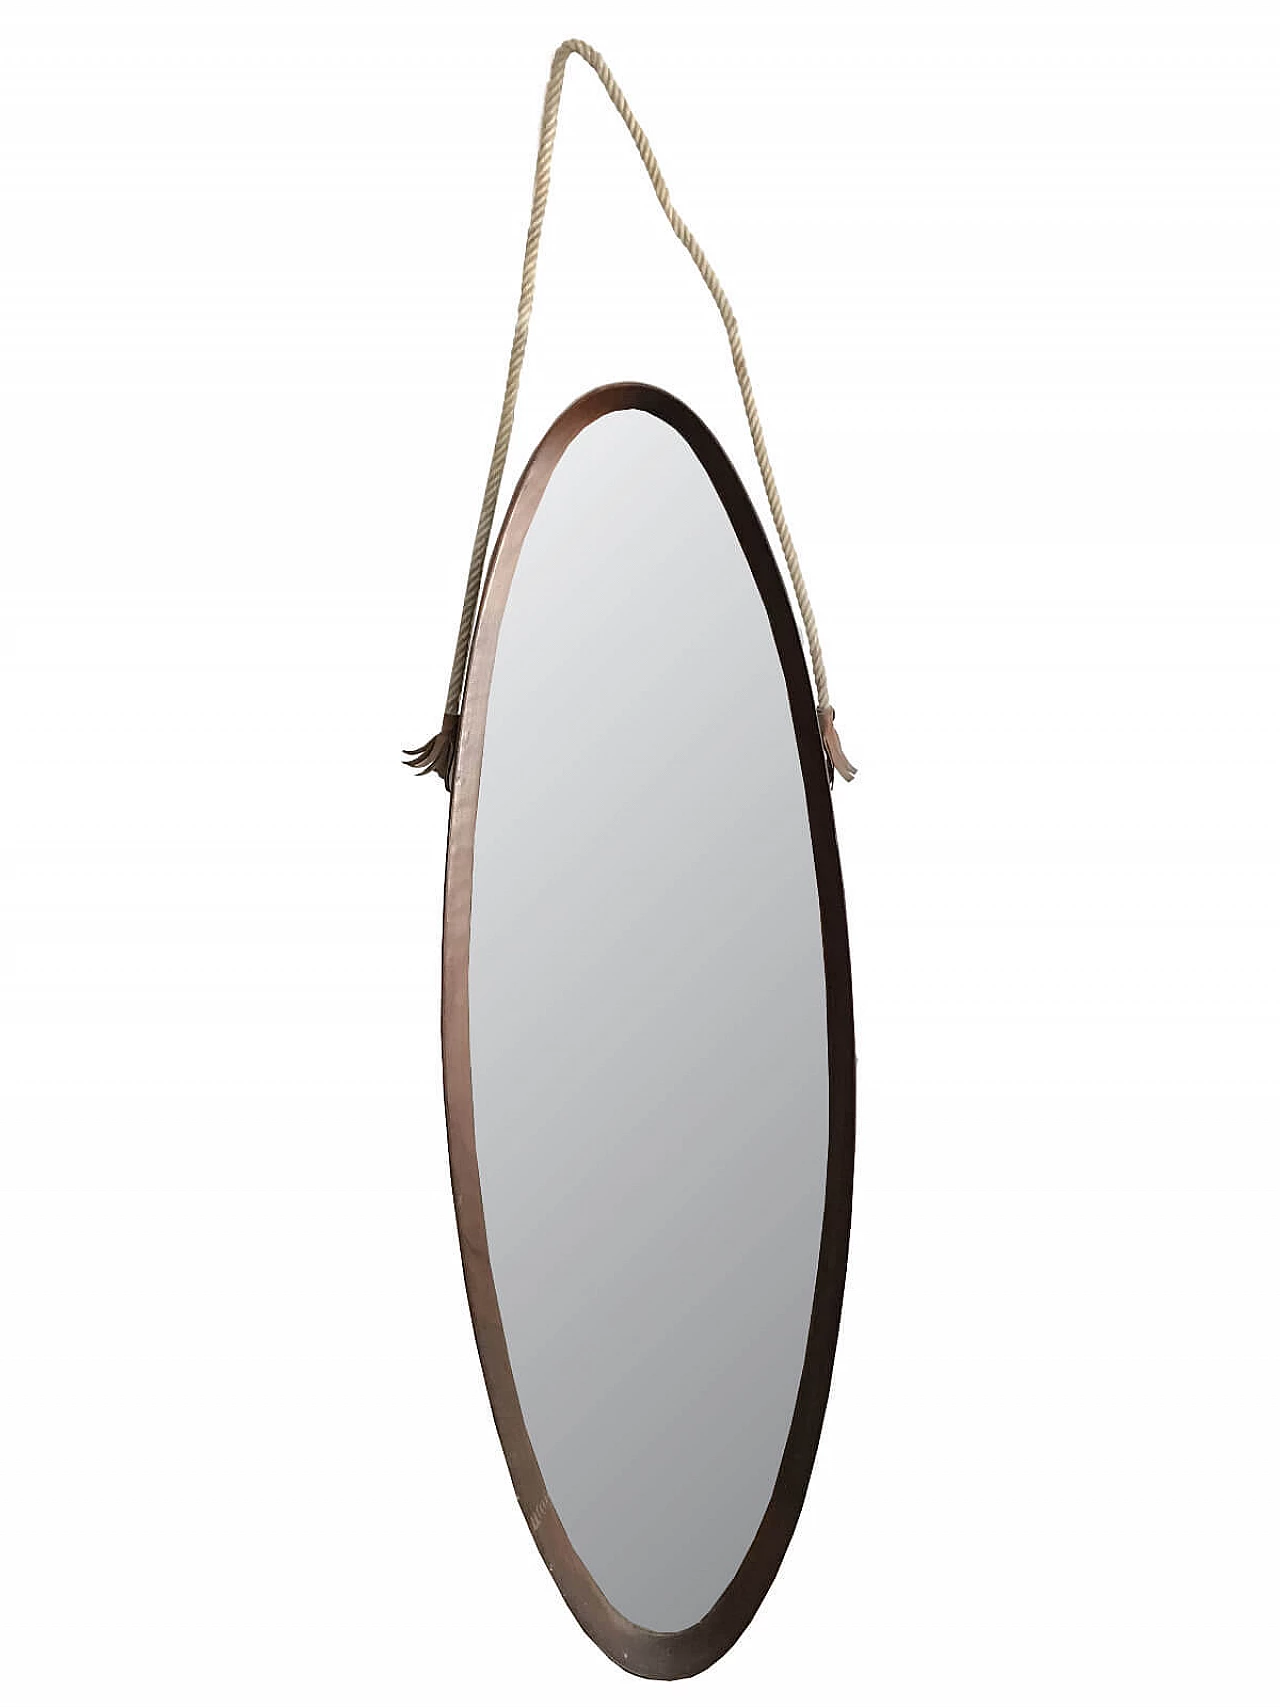 Oval mirror in teak frame 1040406